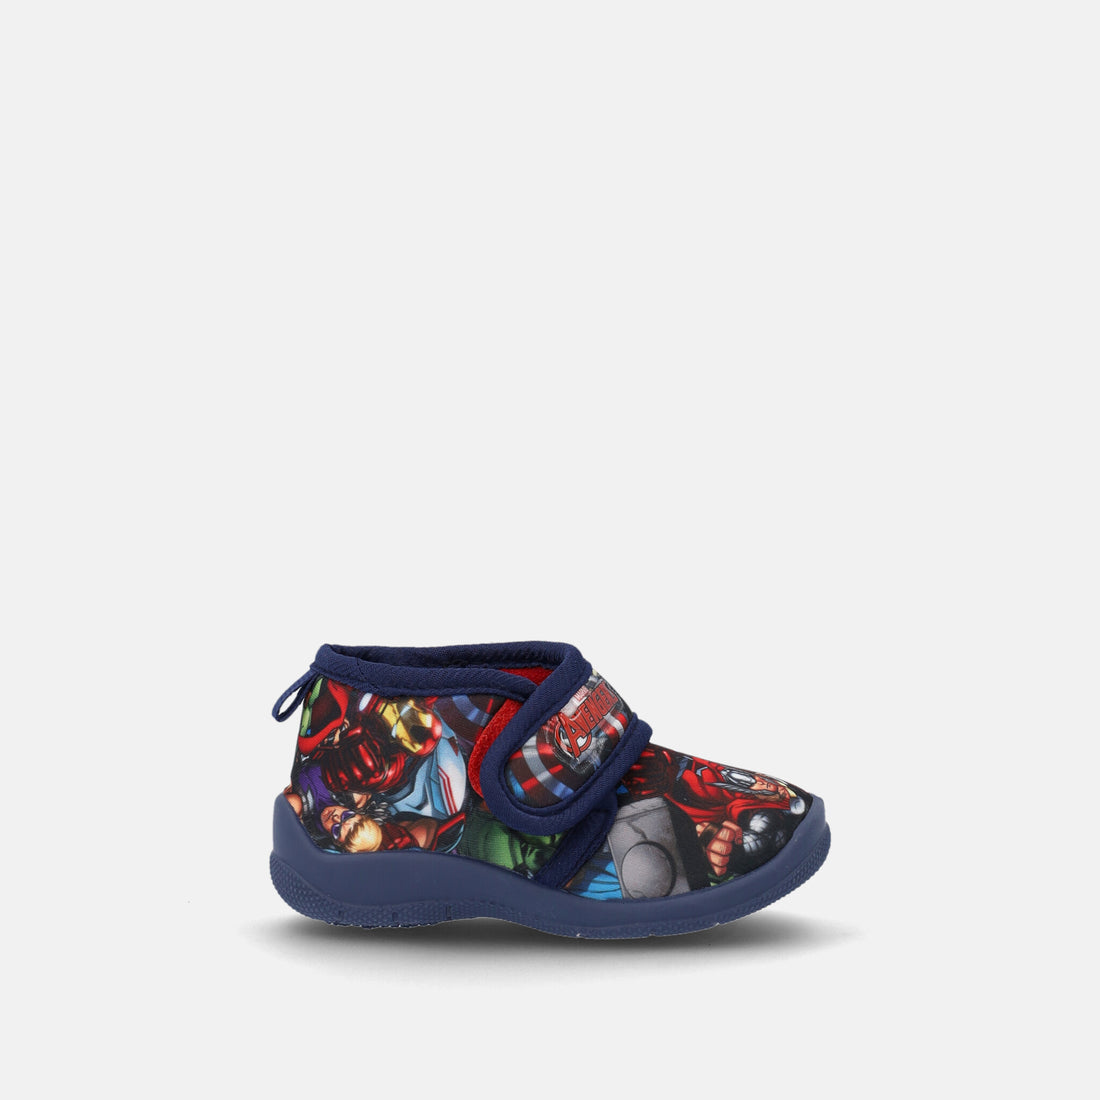 Pantofola bambini supereroi Marvel